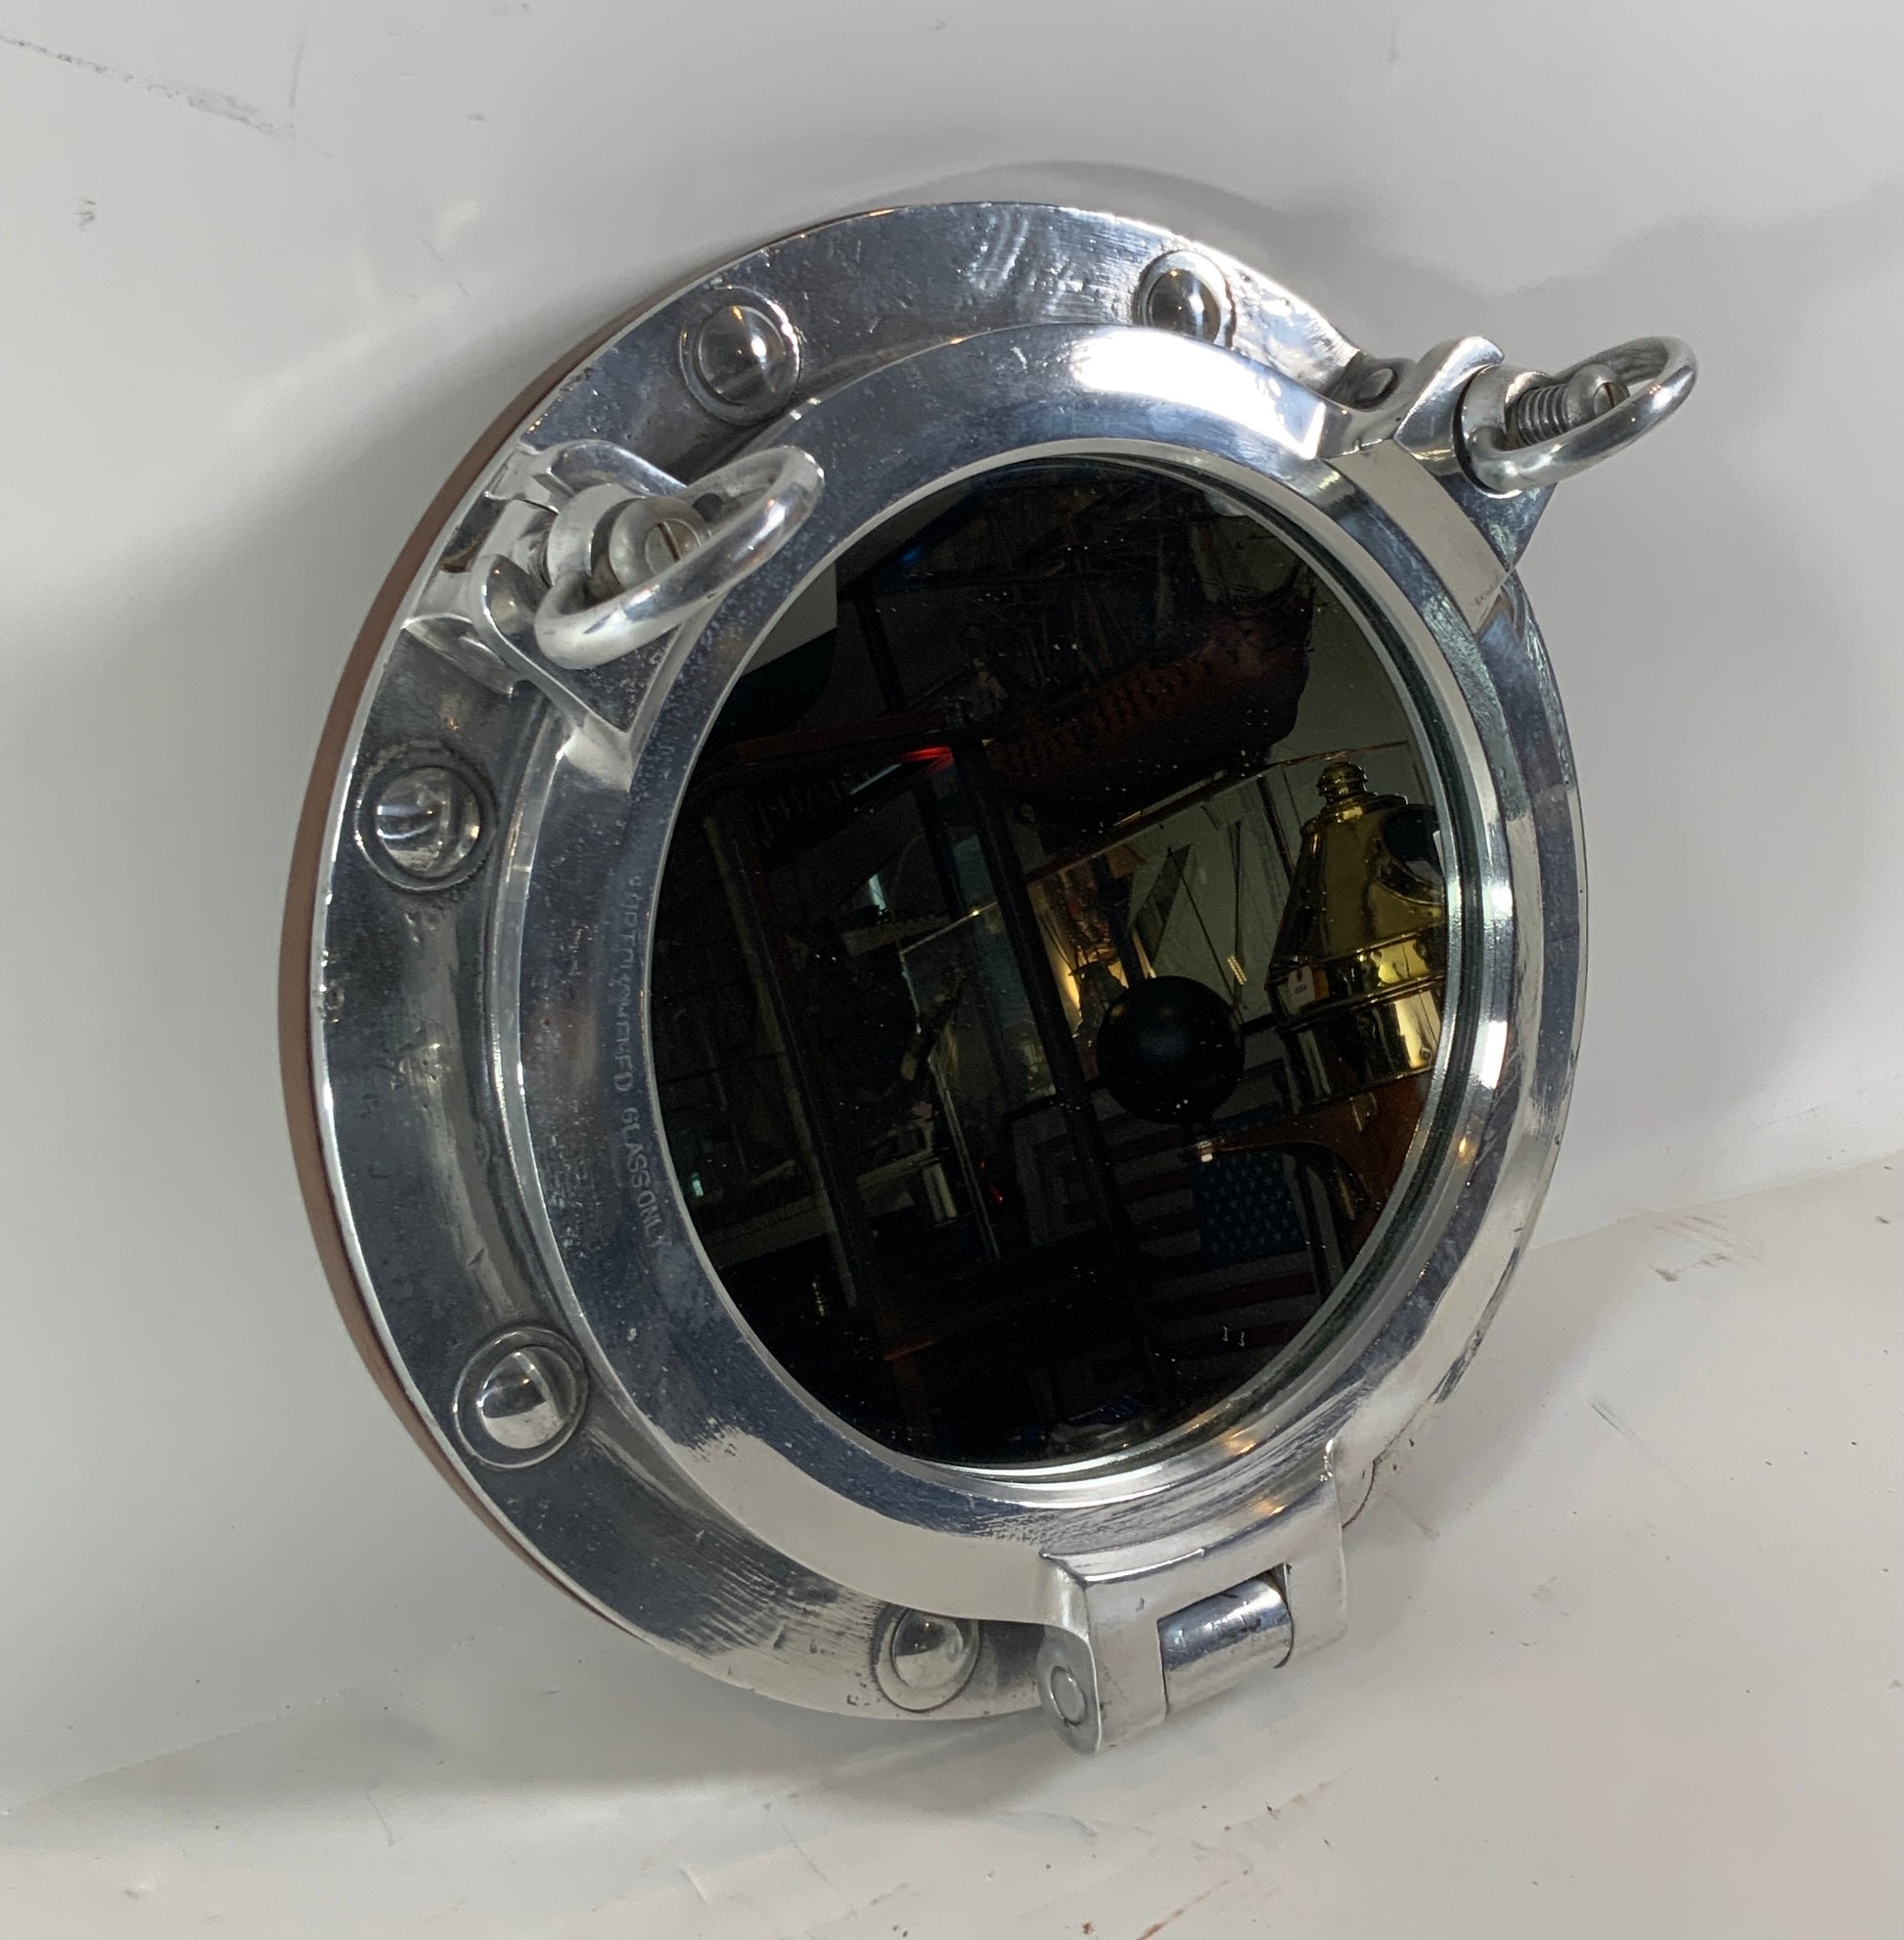 15 Inch Aluminum Ship's Porthole Mirror - Lannan Gallery